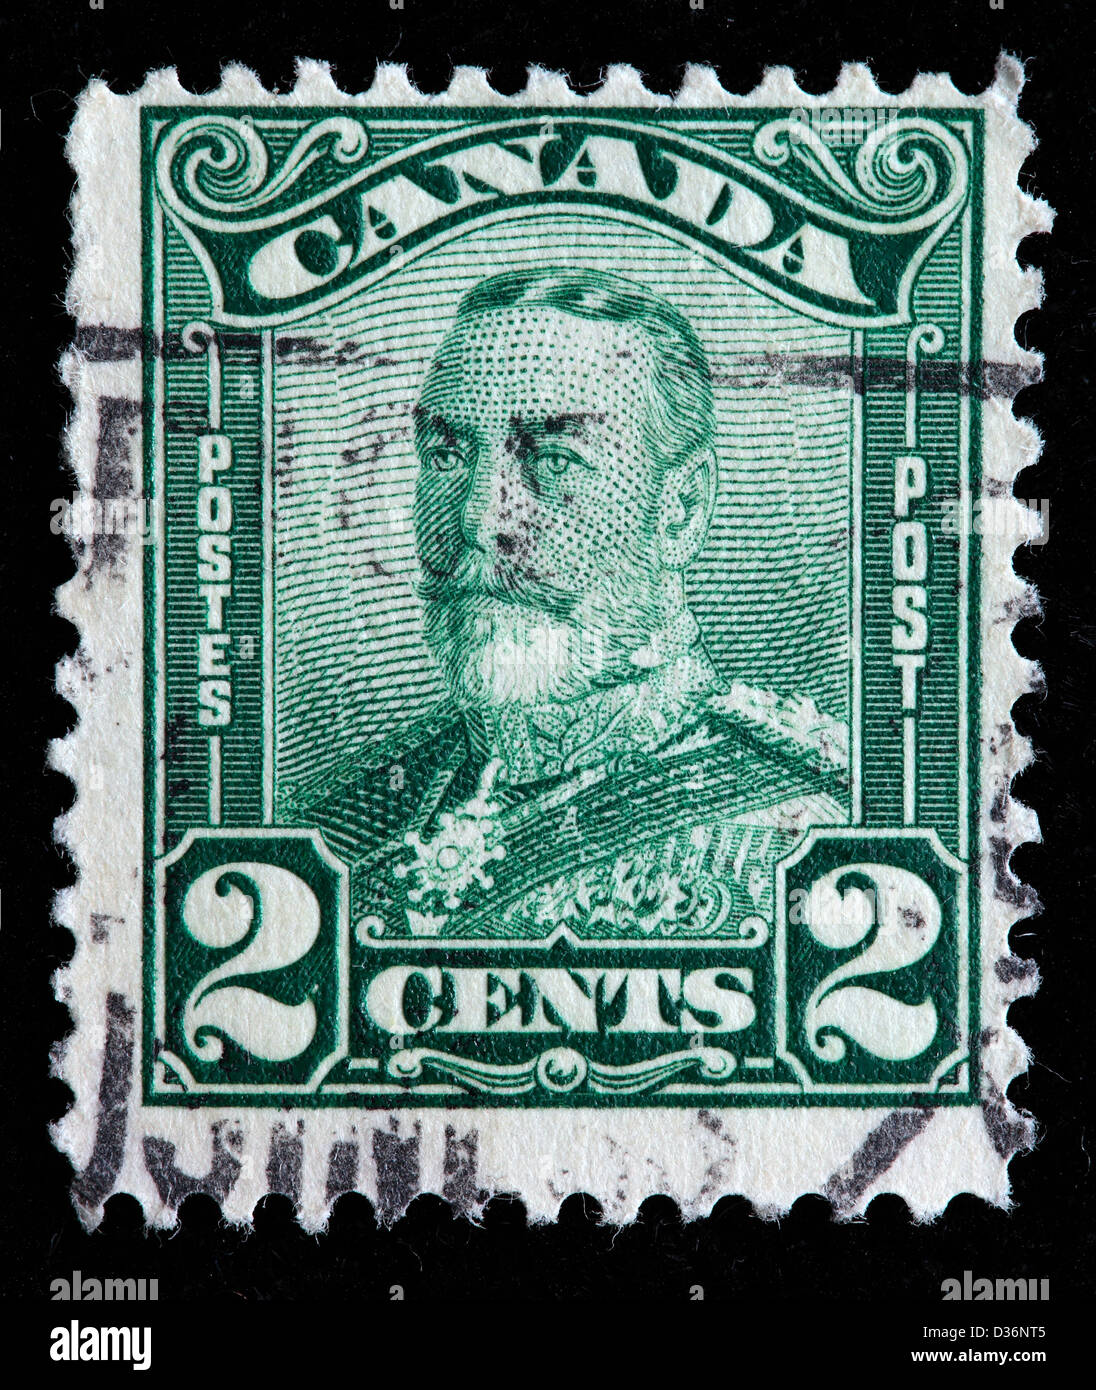 Le roi George V, timbre-poste, Canada, 1928 Banque D'Images